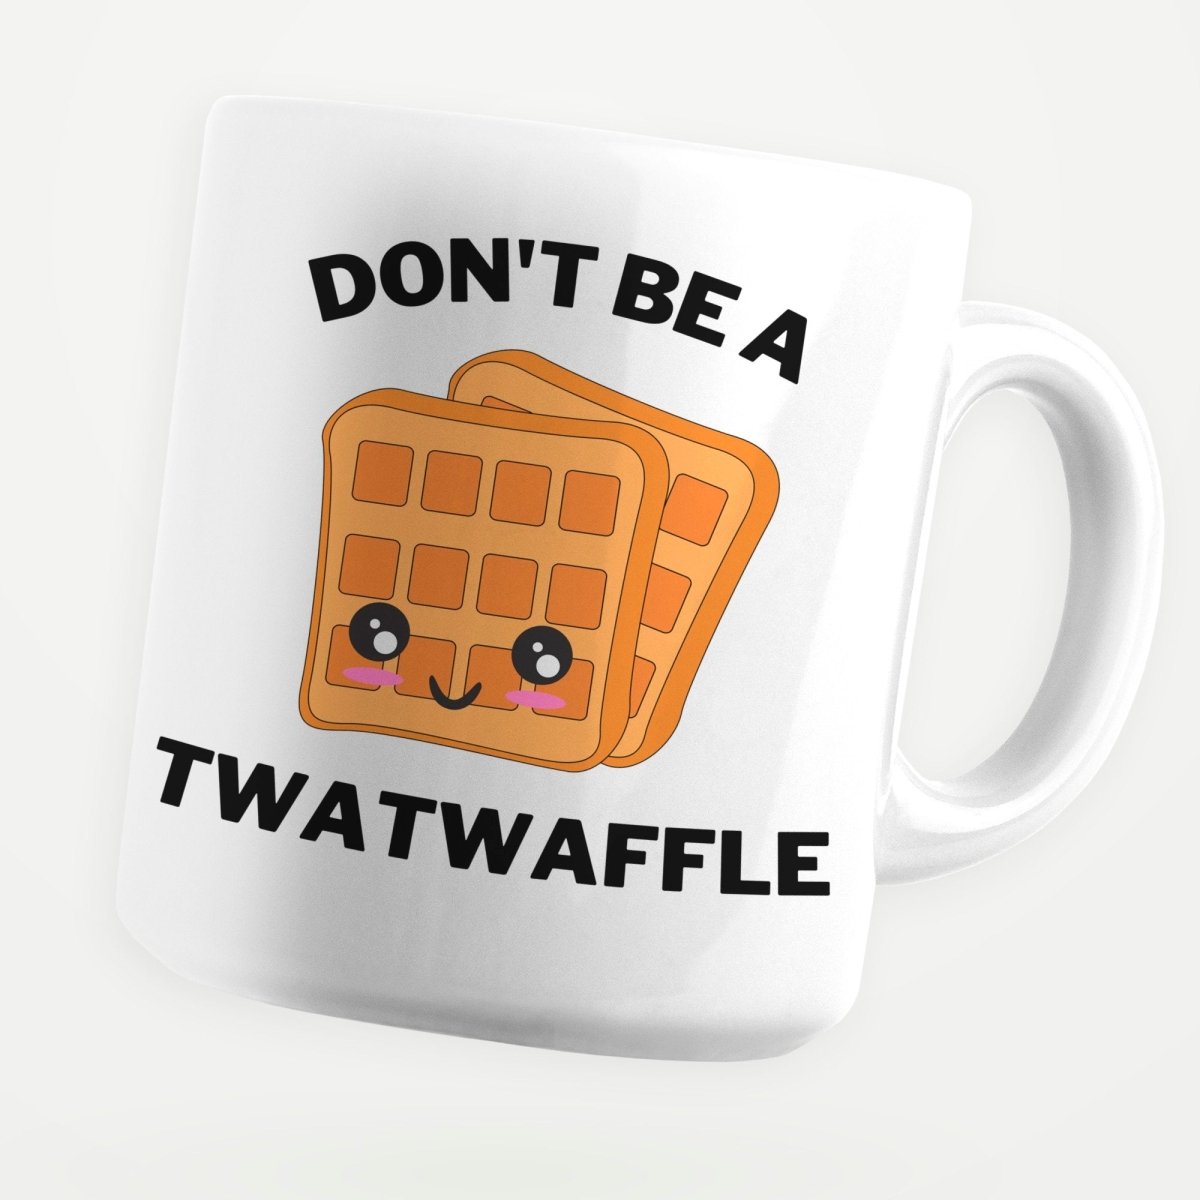 Don't Be A Twat Waffle 11oz Coffee Mug - stickerbullDon't Be A Twat Waffle 11oz Coffee MugMugsstickerbullstickerbullMug_Don'tBeATwatWaffleDon't Be A Twat Waffle 11oz Coffee Mug